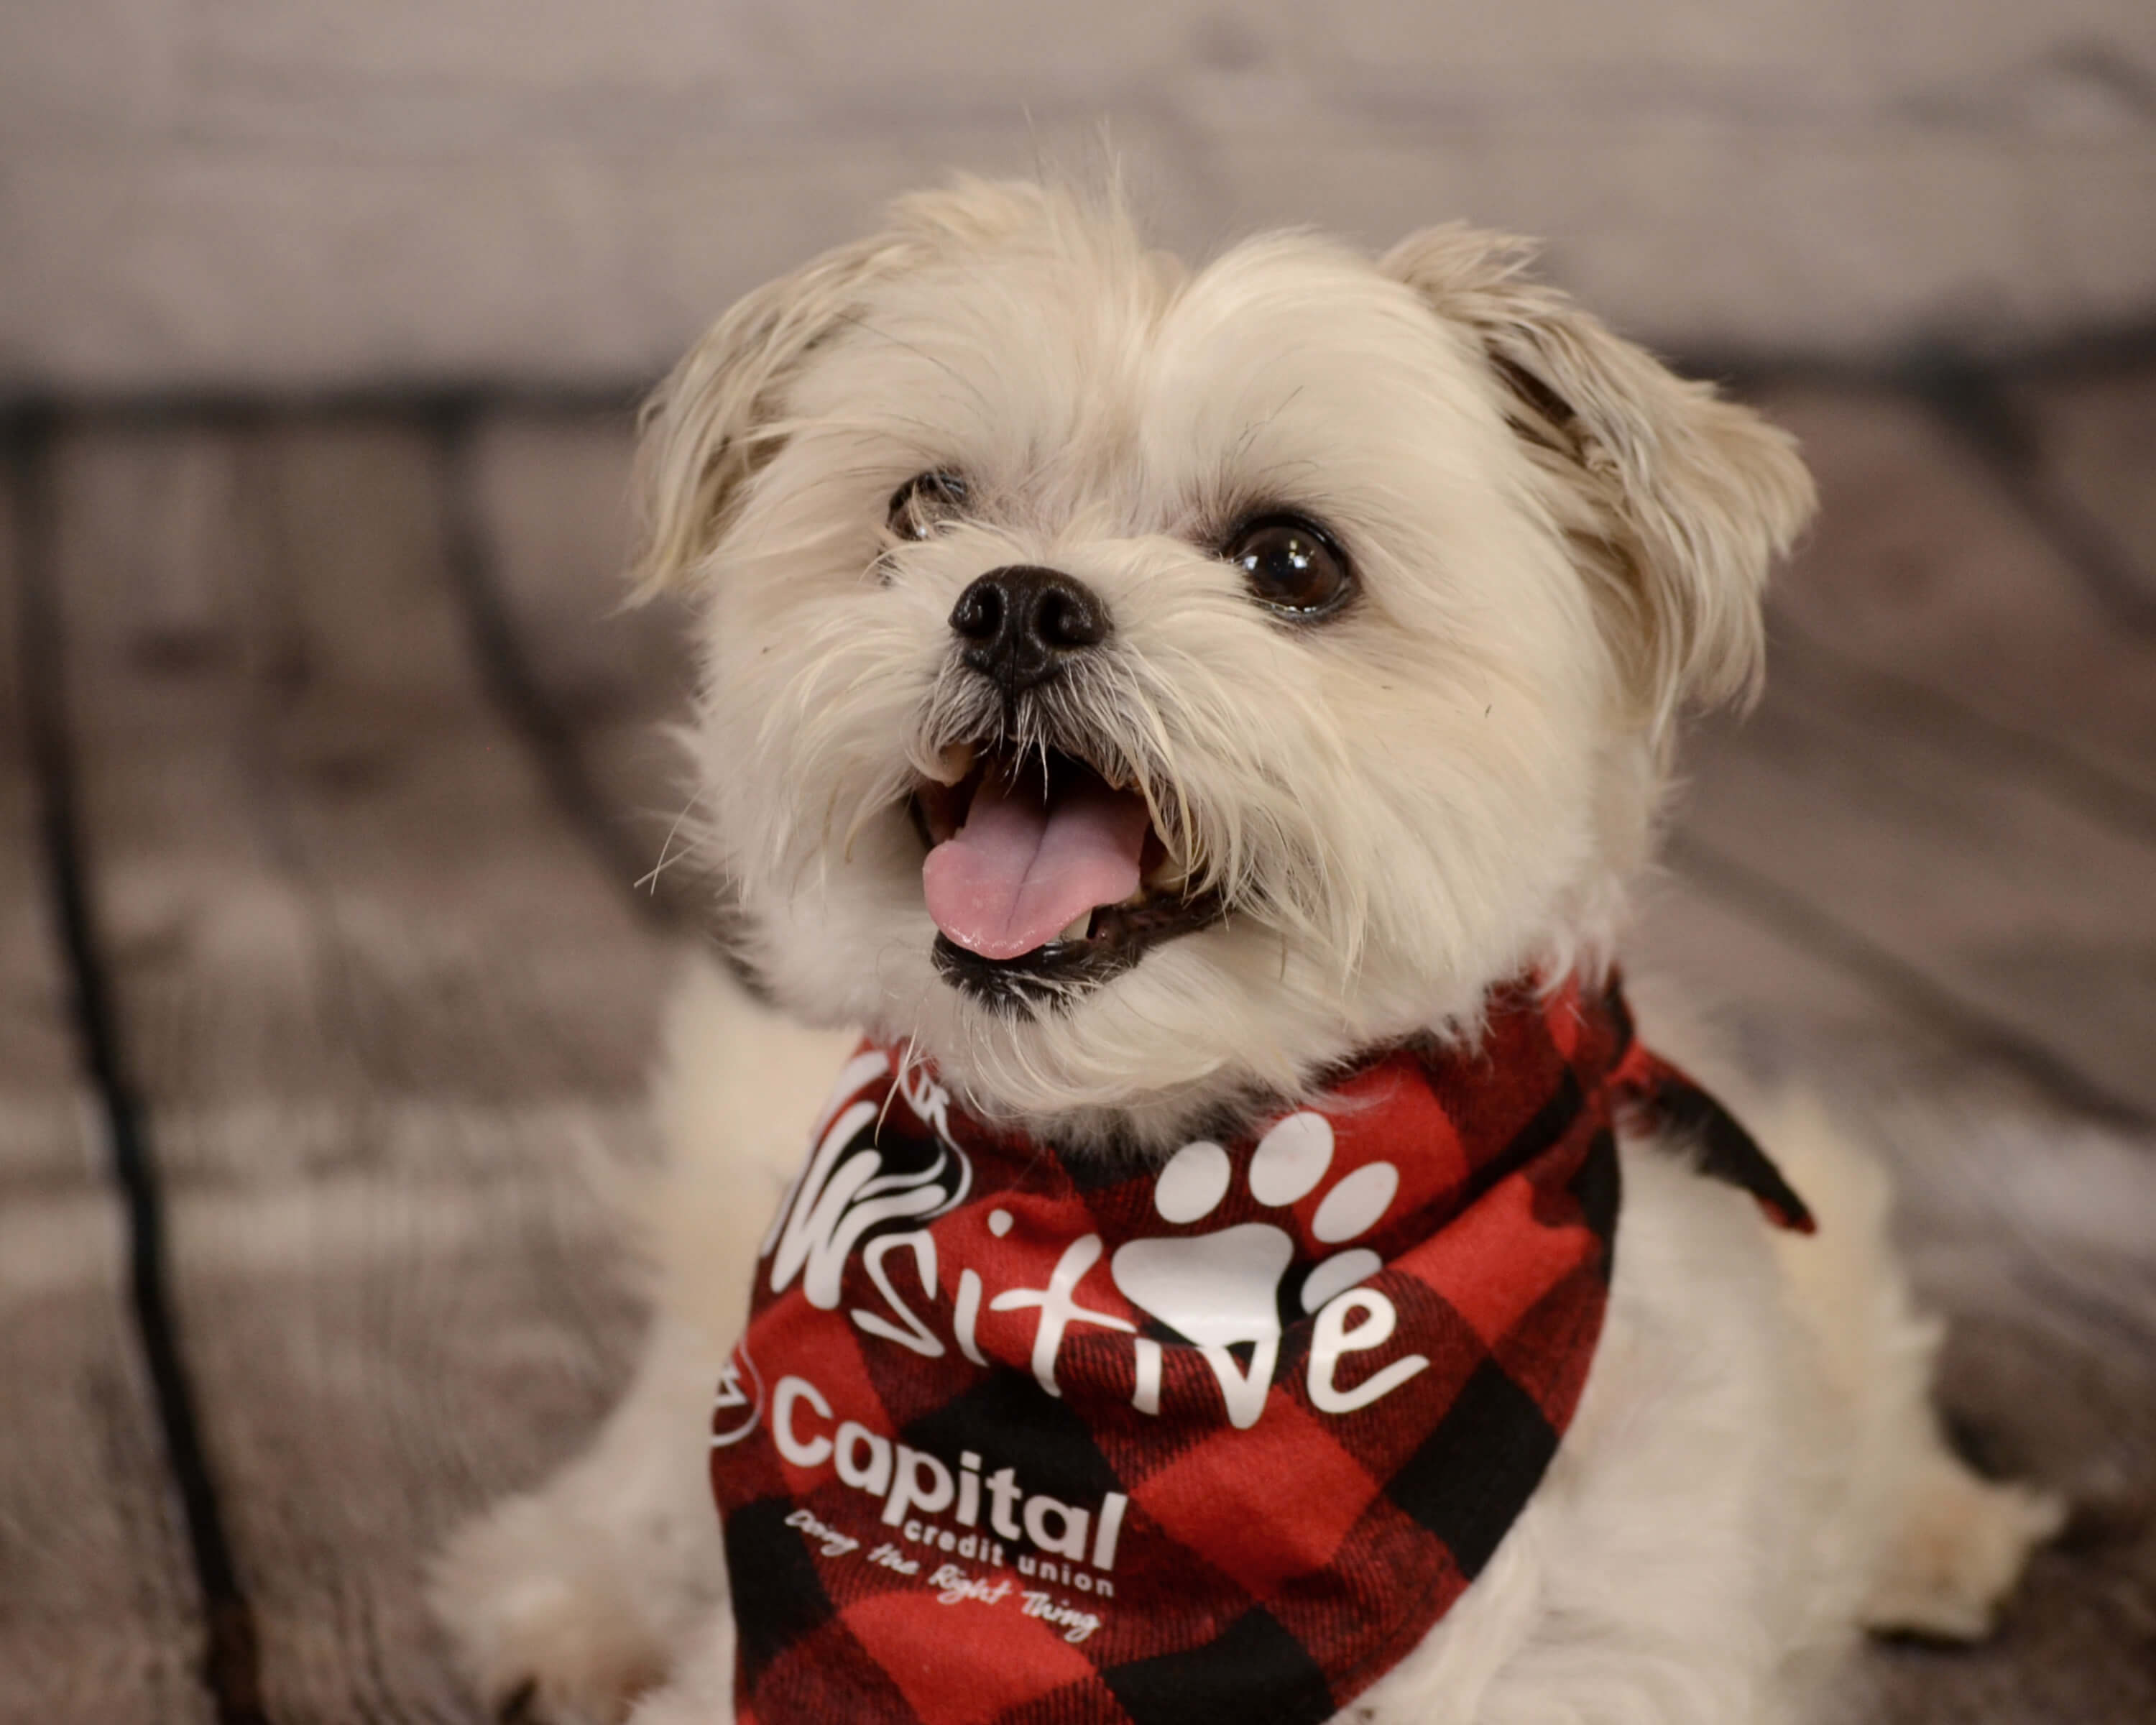 Cute dog wearing a Capital CU branded bandanna.